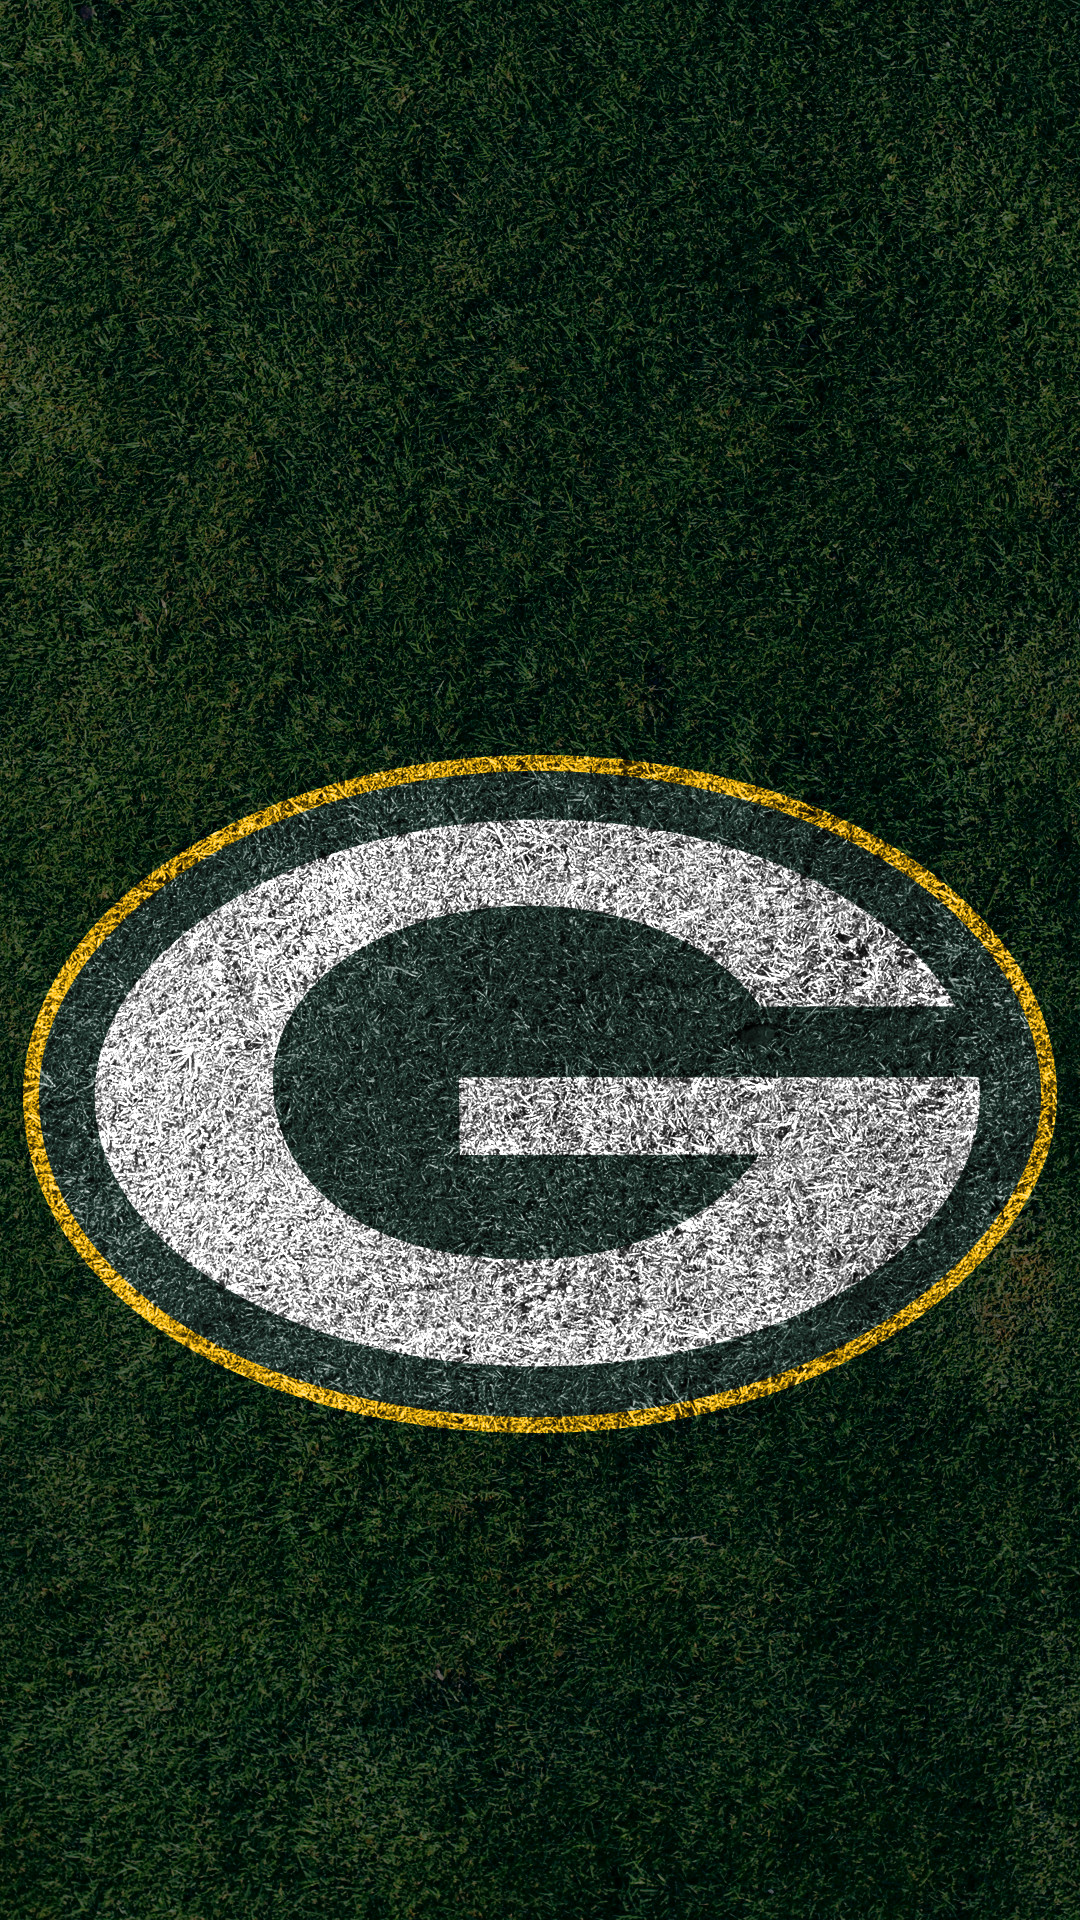 1080x1920 ... Green Bay Packers 2017 turf logo wallpaper free iphone 5, 6, 7, galaxy